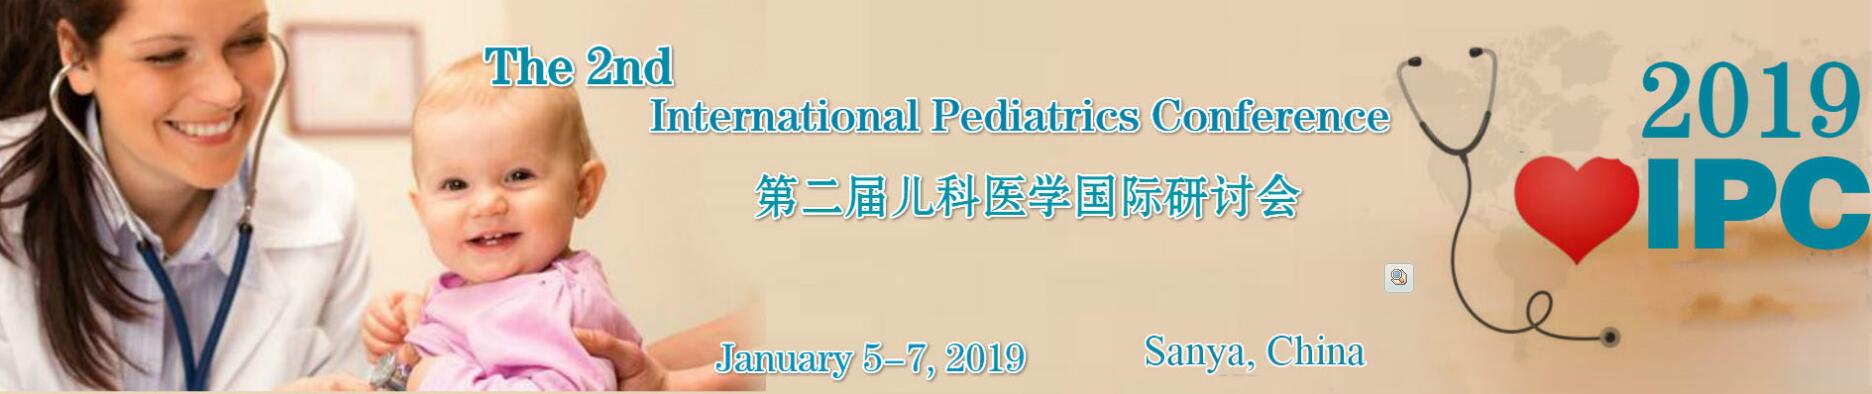 The 2nd International Pediatrics Conference（IPC 2019）, Sanya, Hainan, China